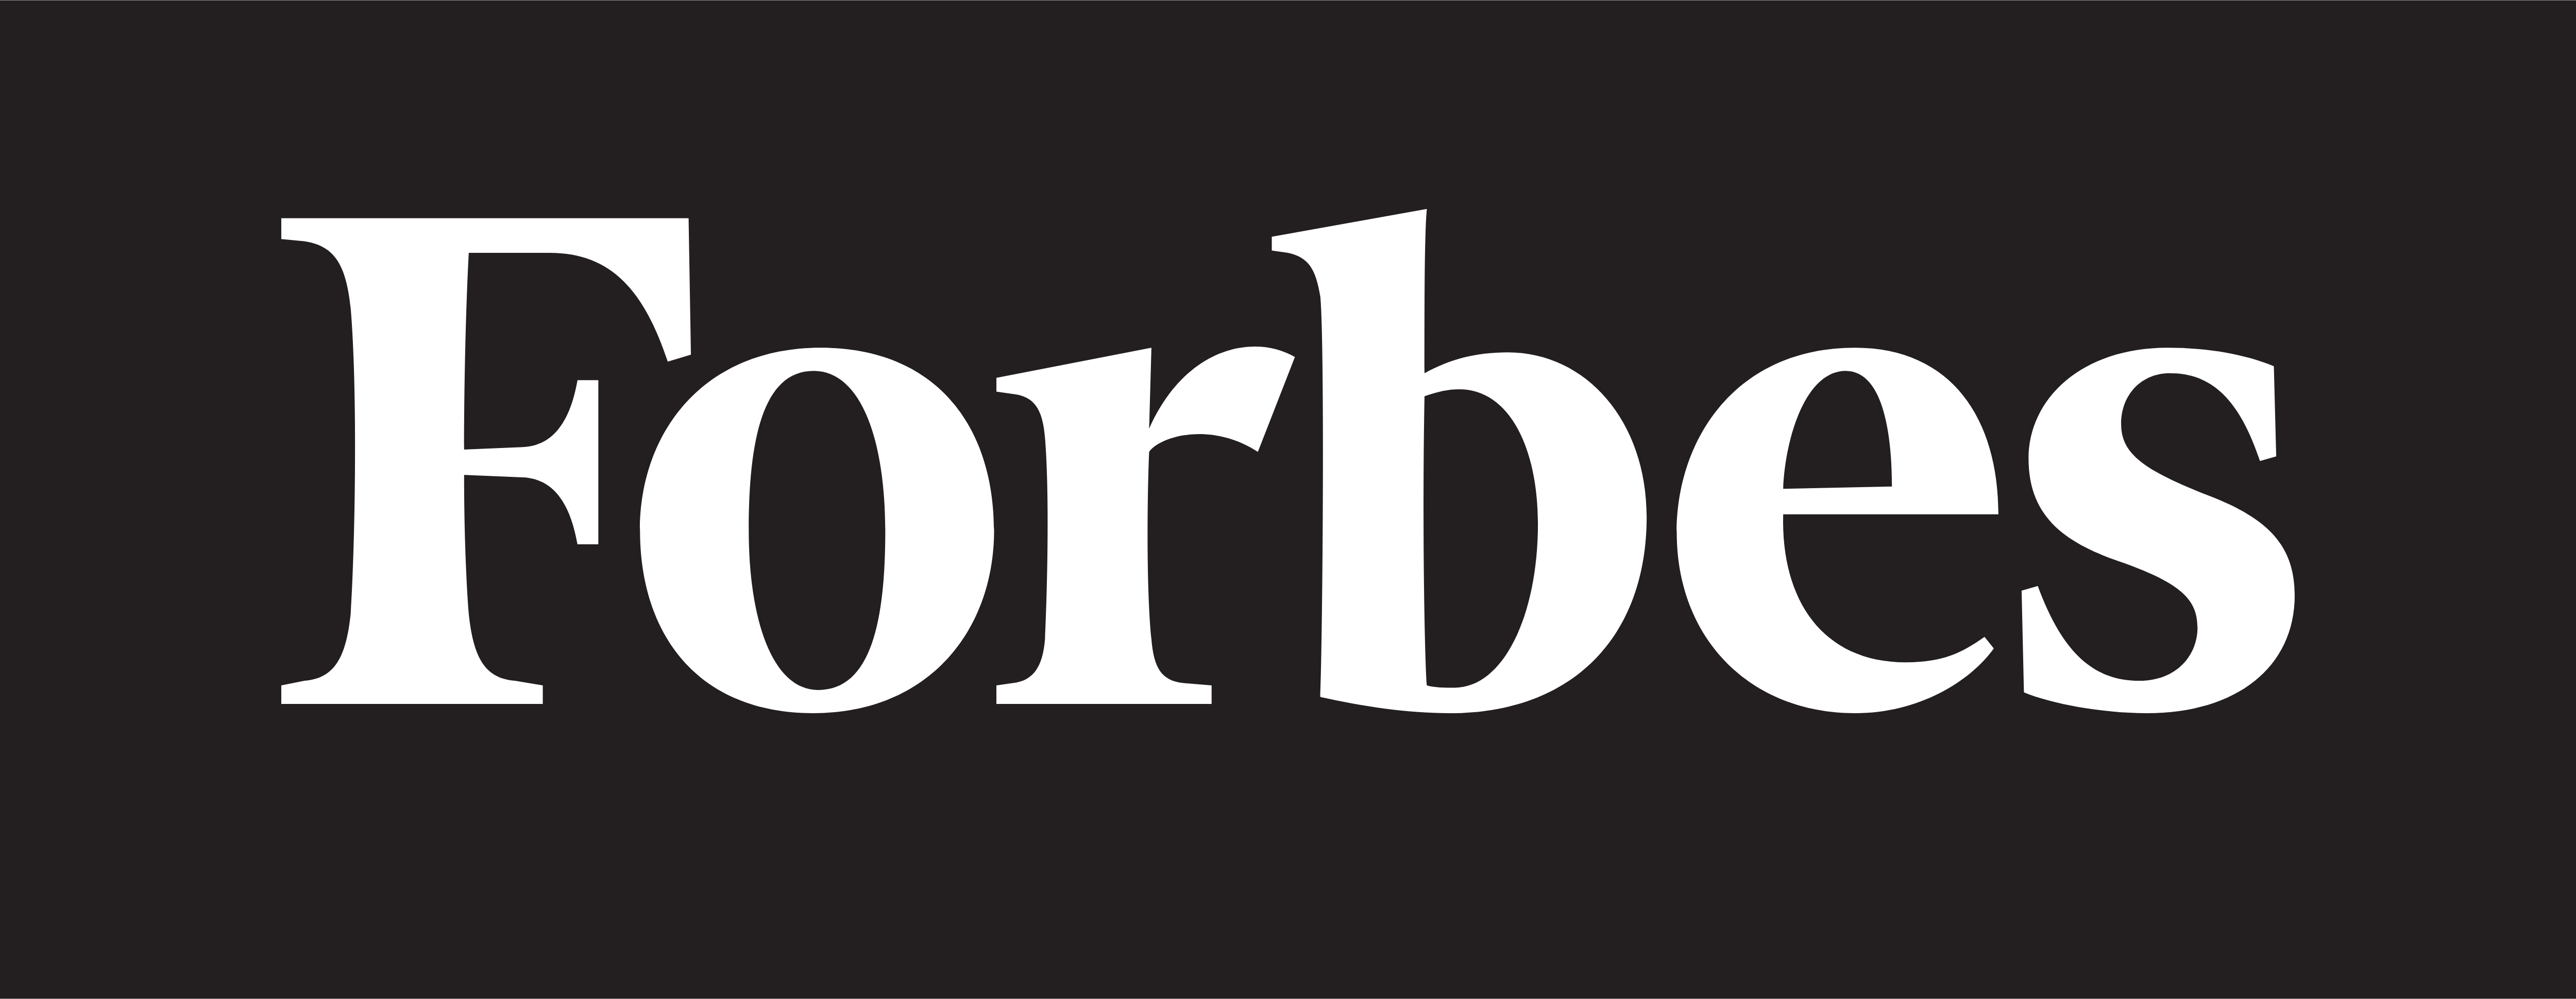 Forbes – Ladda ner logotyper